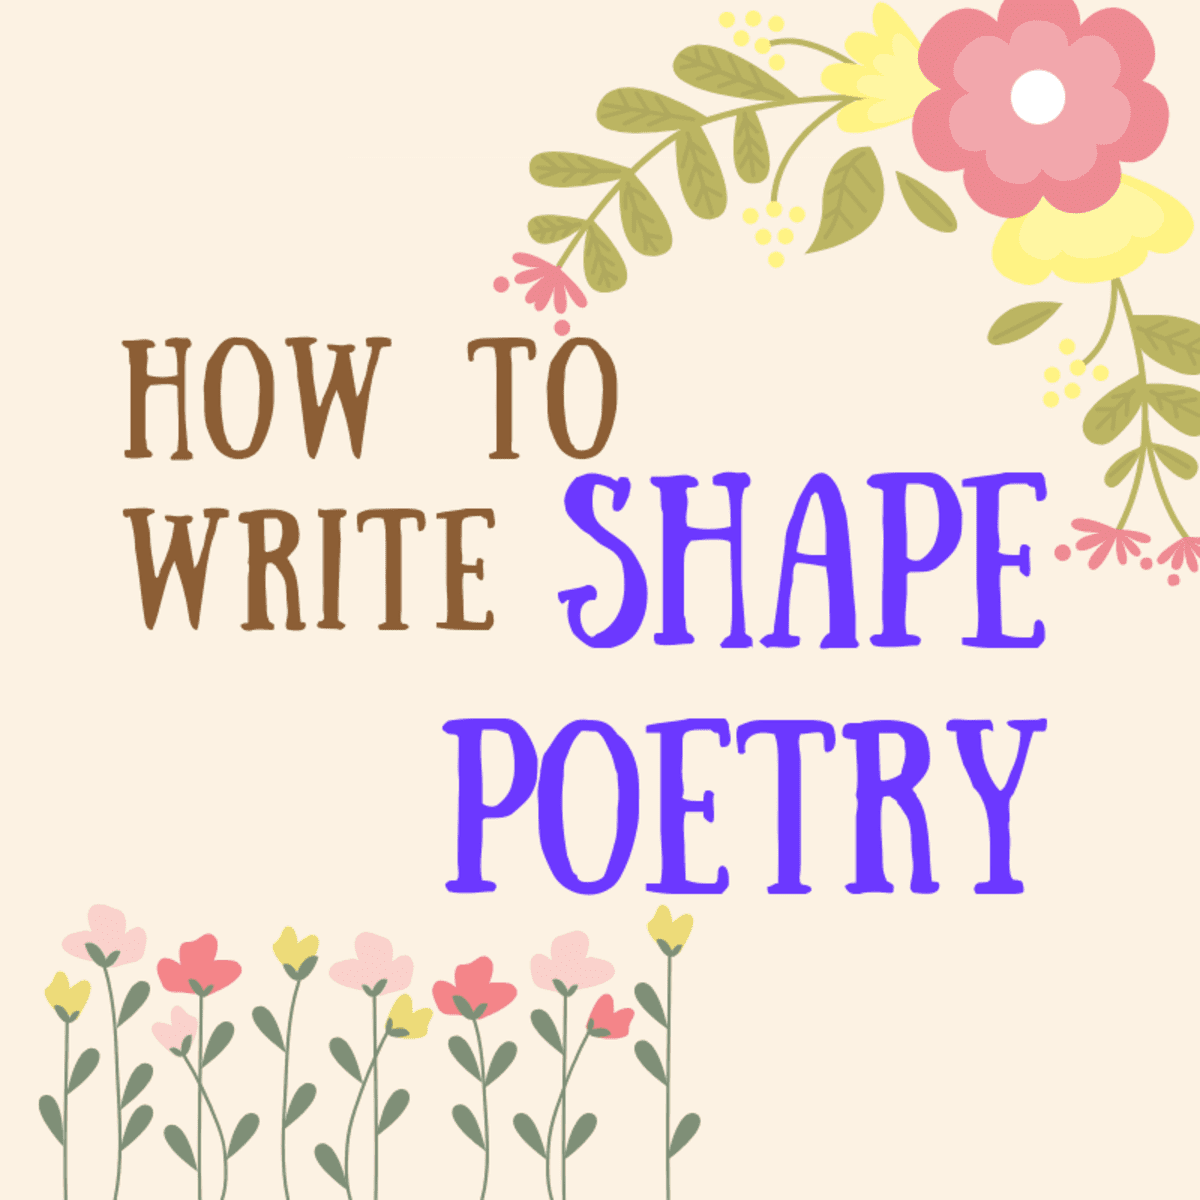 how to write a creative poem